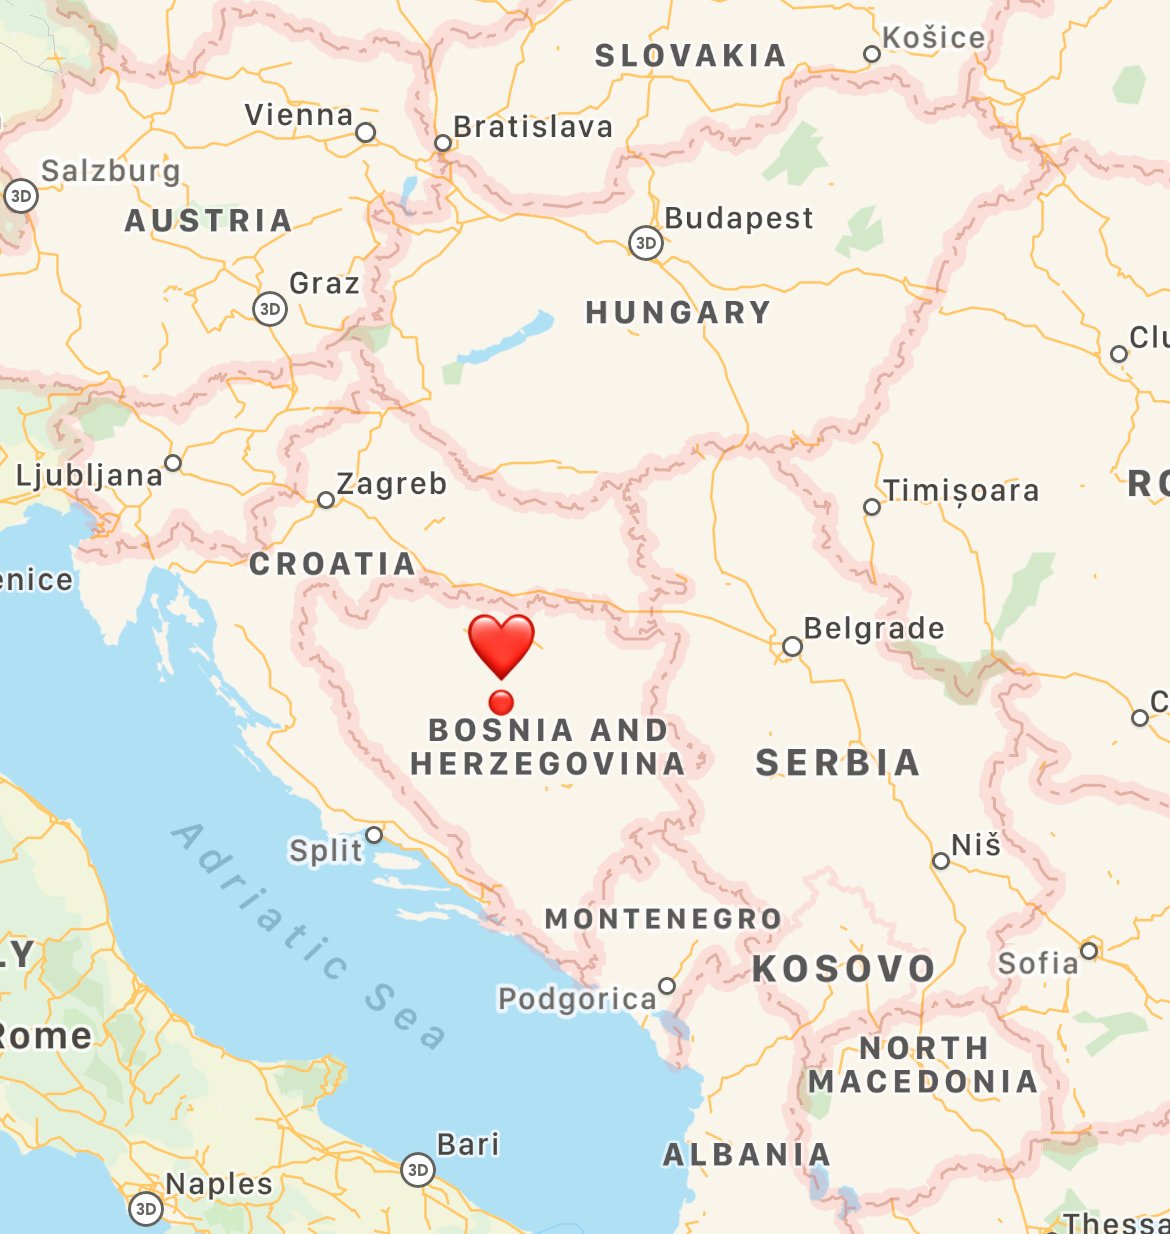 Where is Bosnia & Herzegovina